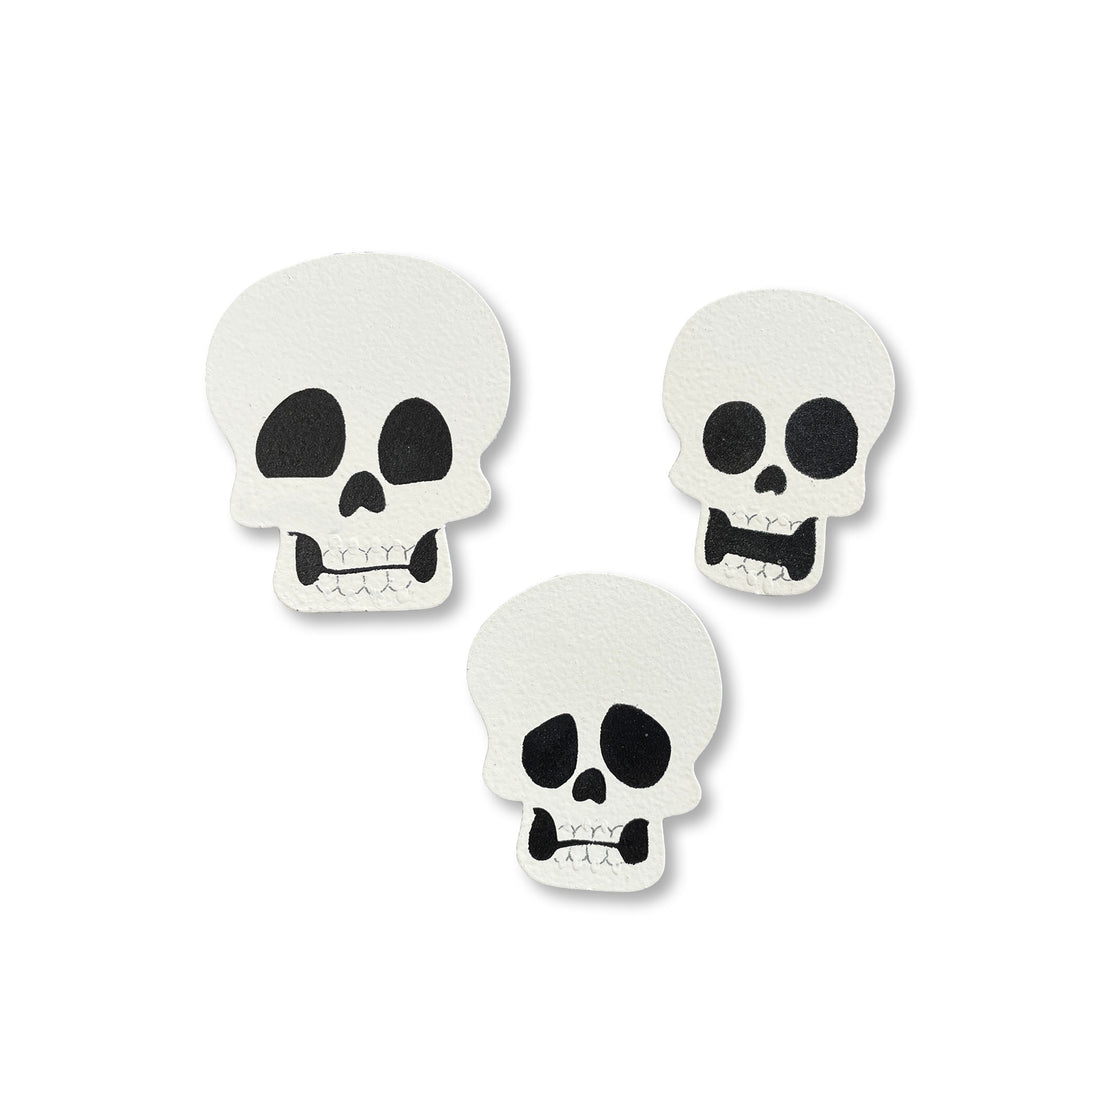 Skeleton Head Magnets S/3